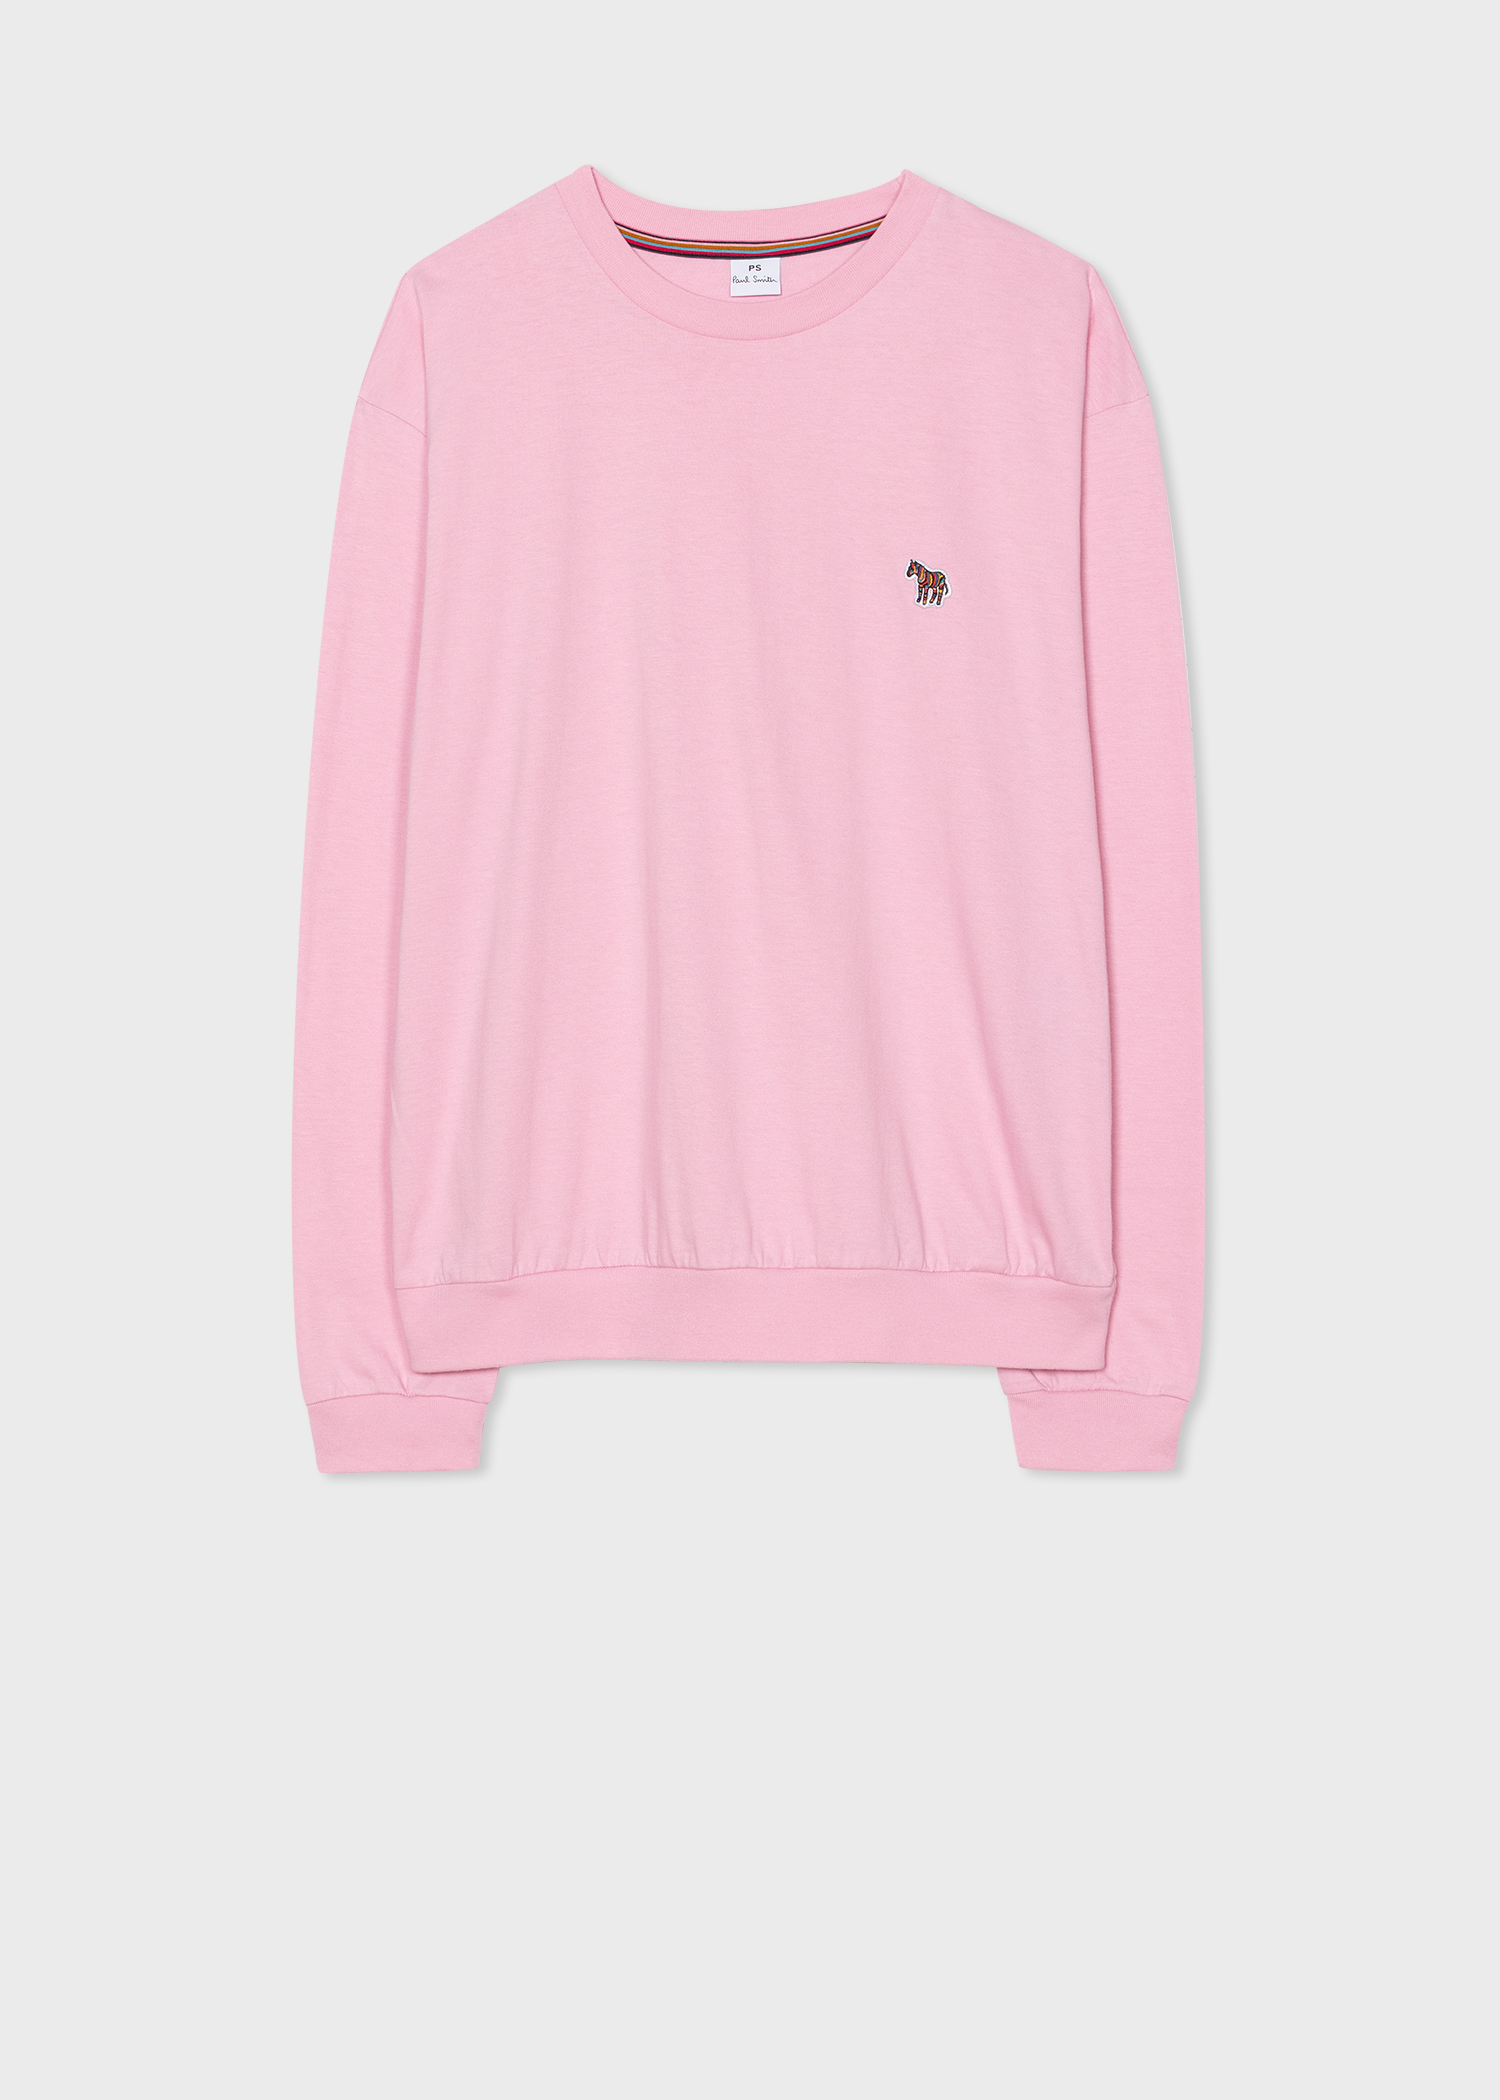 Women's Pink Zebra Logo Long-Sleeve T-Shirt